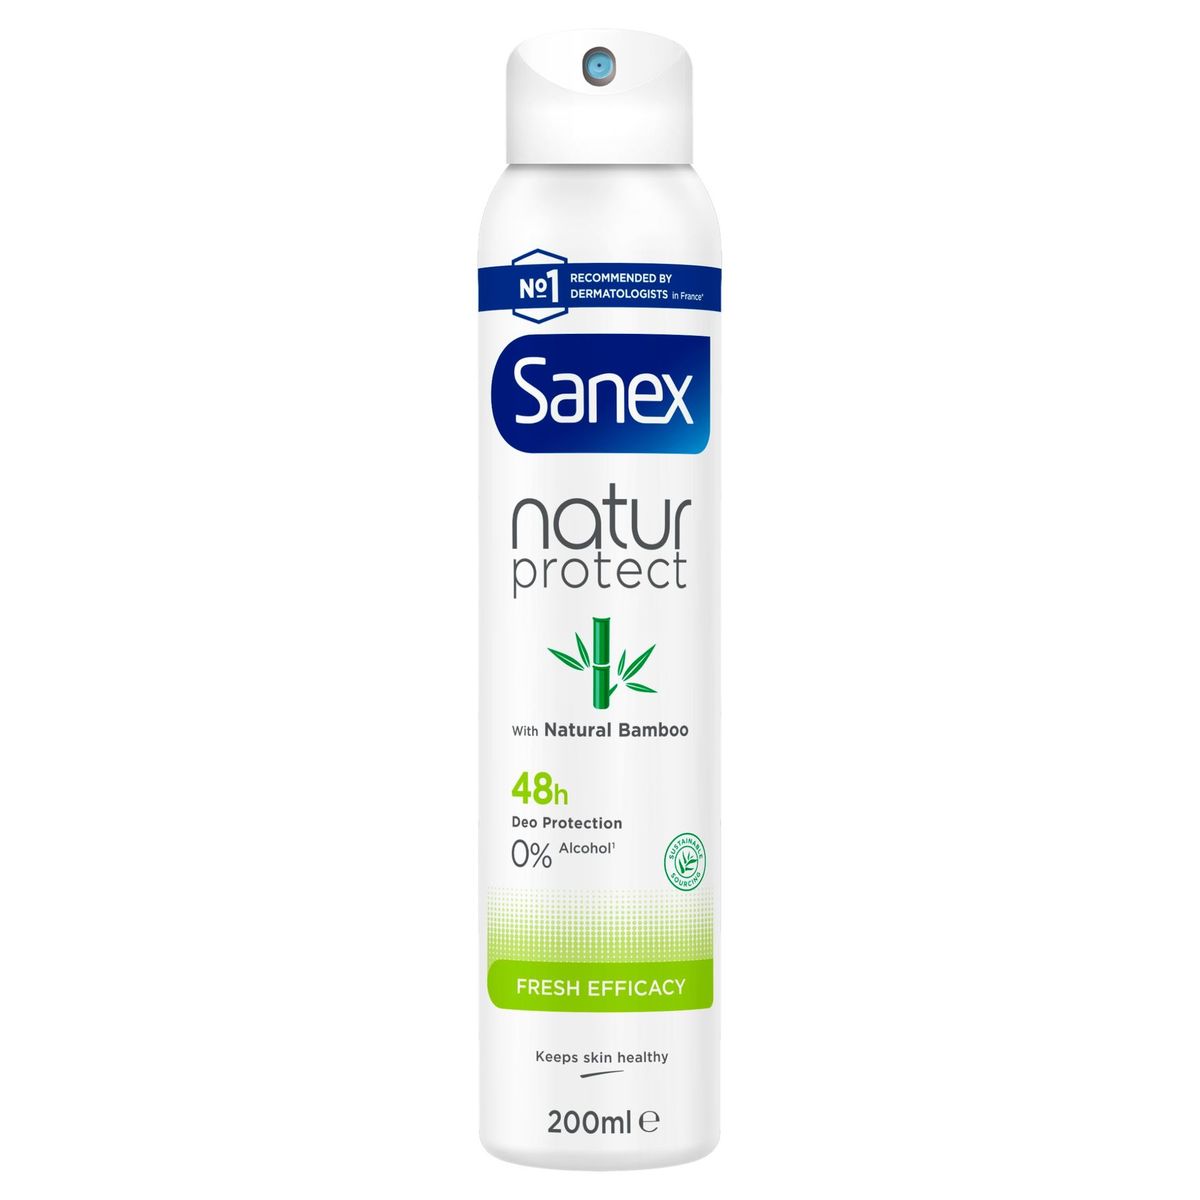 Sanex Natur Protect Fresh Efficacy Natural Bamboo Deodorant - 200 ml